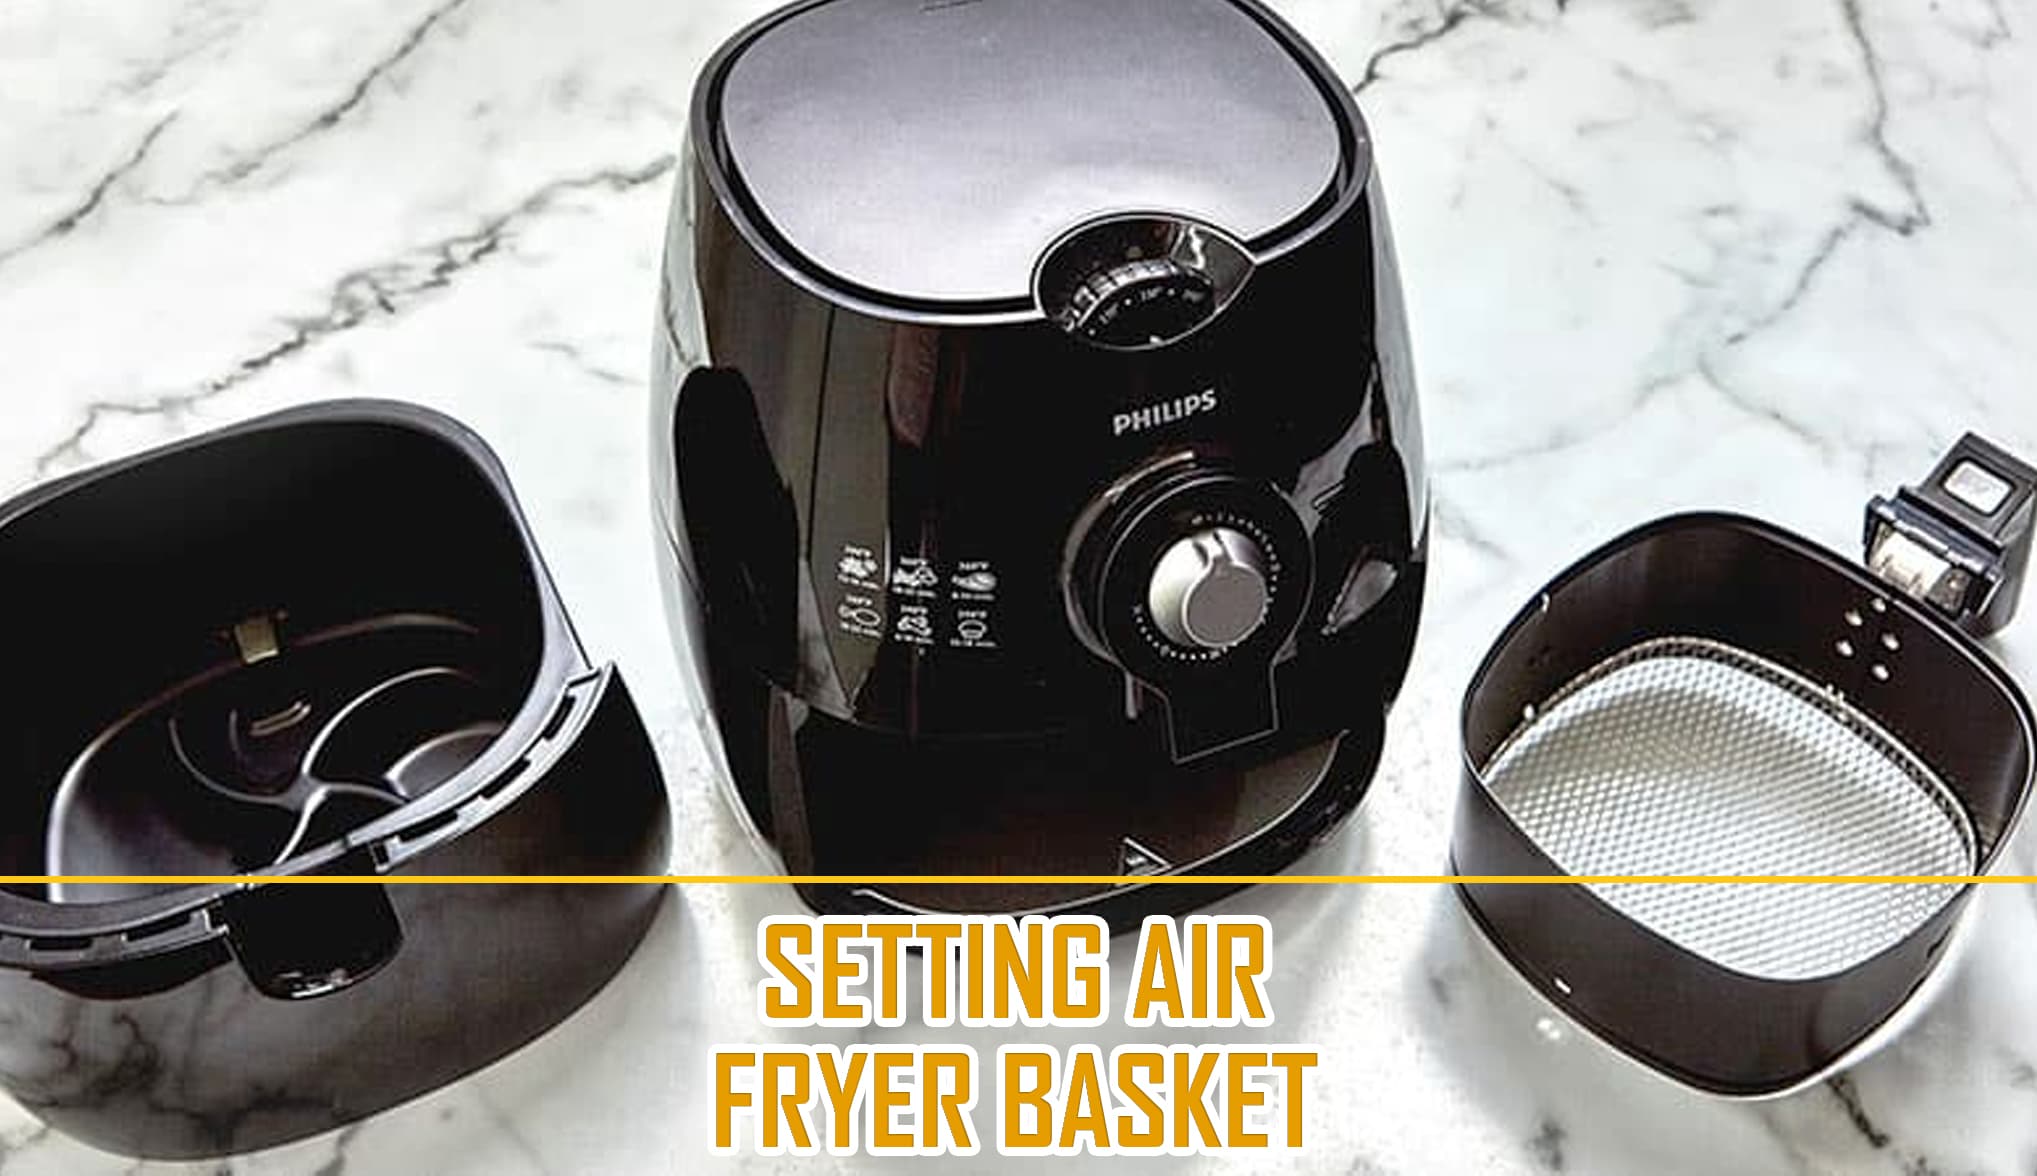 Setting air fryer basket